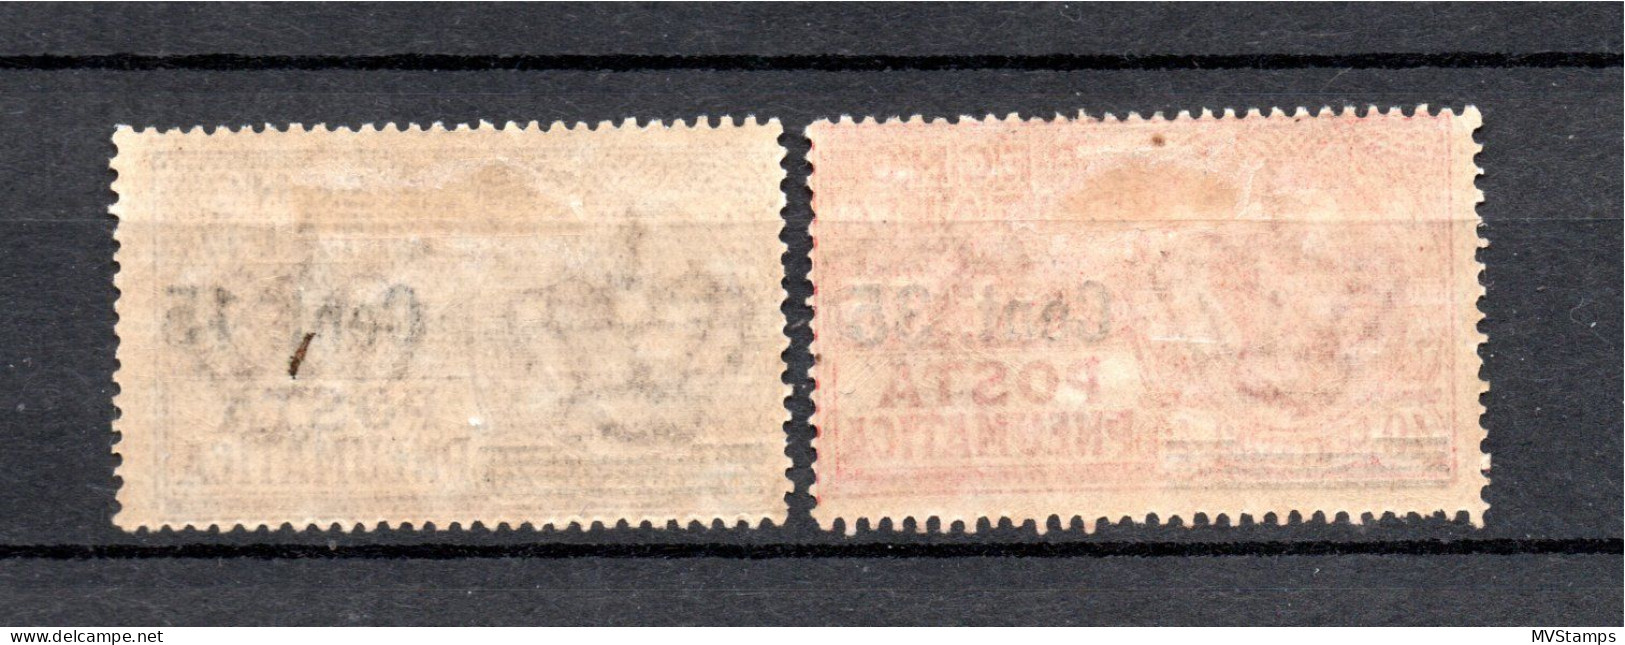 Italy 1927 Old Set Overprinted Pneumatica-stamps (Michel 268/69) Nice MLH - Pneumatische Post